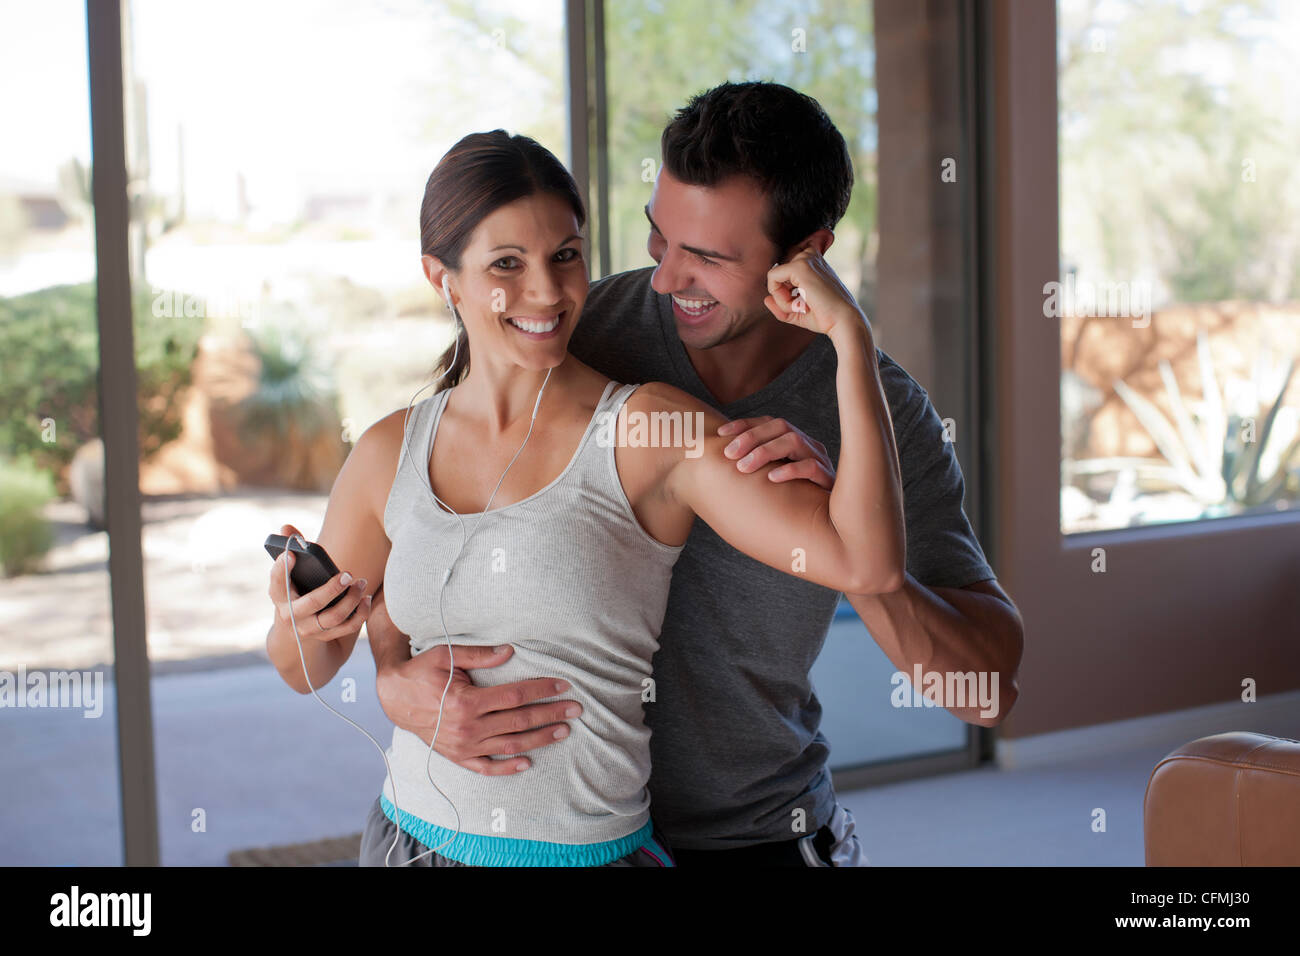 USA, Arizona, Phoenix, Frau mit Trainer beugen Muskel Stockfoto